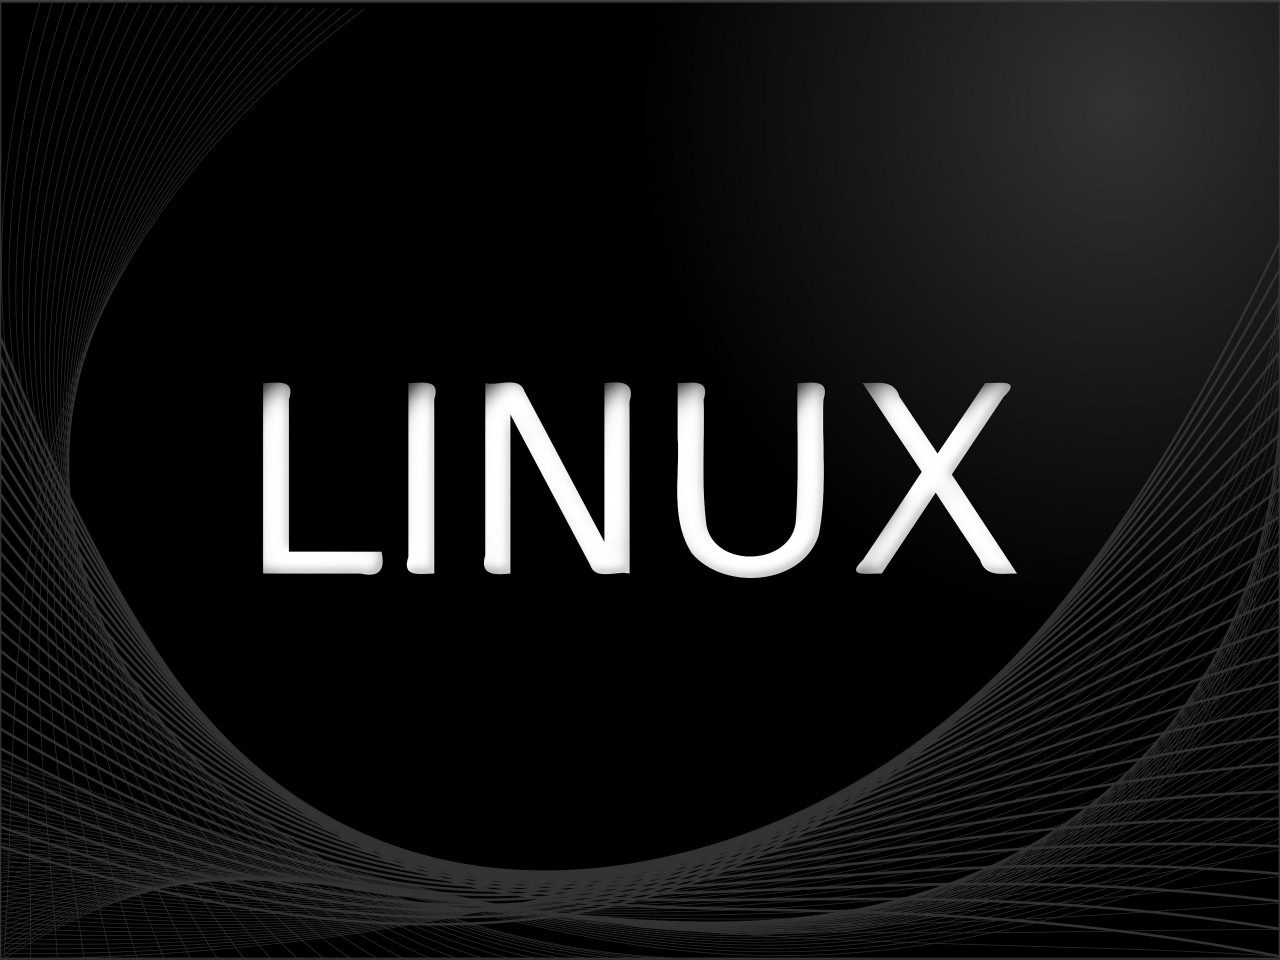 Linuxová tapeta 1280x960.  Tapeta, tapetka, wallpaper, pozadí, wallpaper na plochu